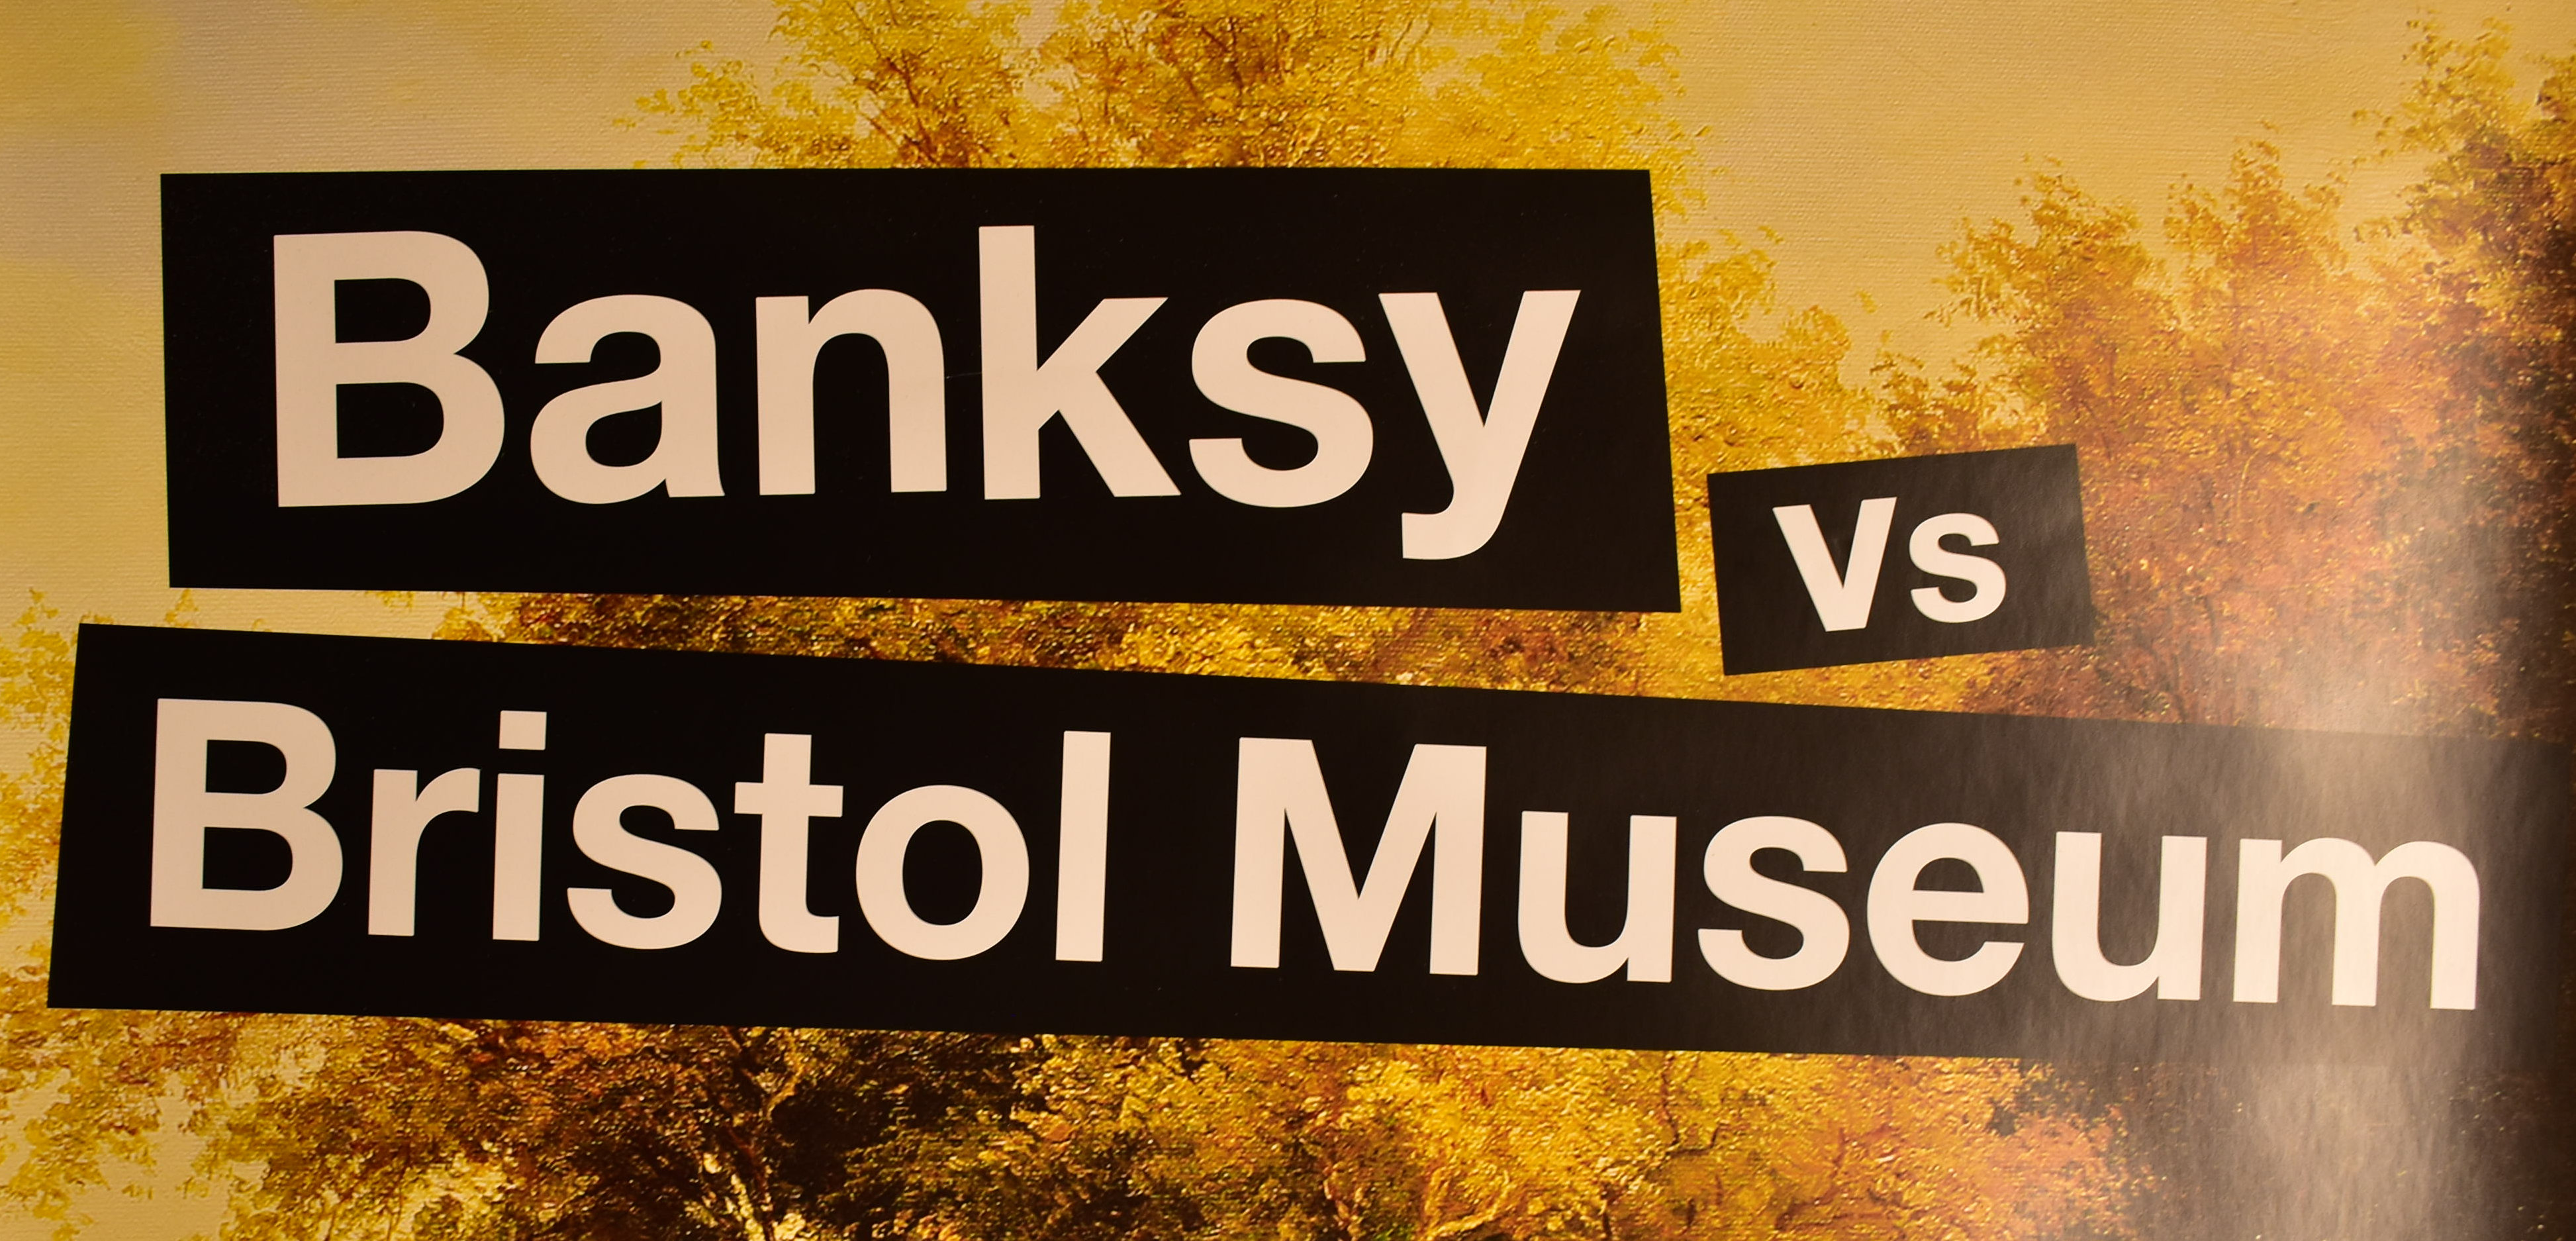 BANKSY - BANKSY VS BRISTOL MUSEUM KLANSMAN EXHIBITION POSTER - Image 2 of 4